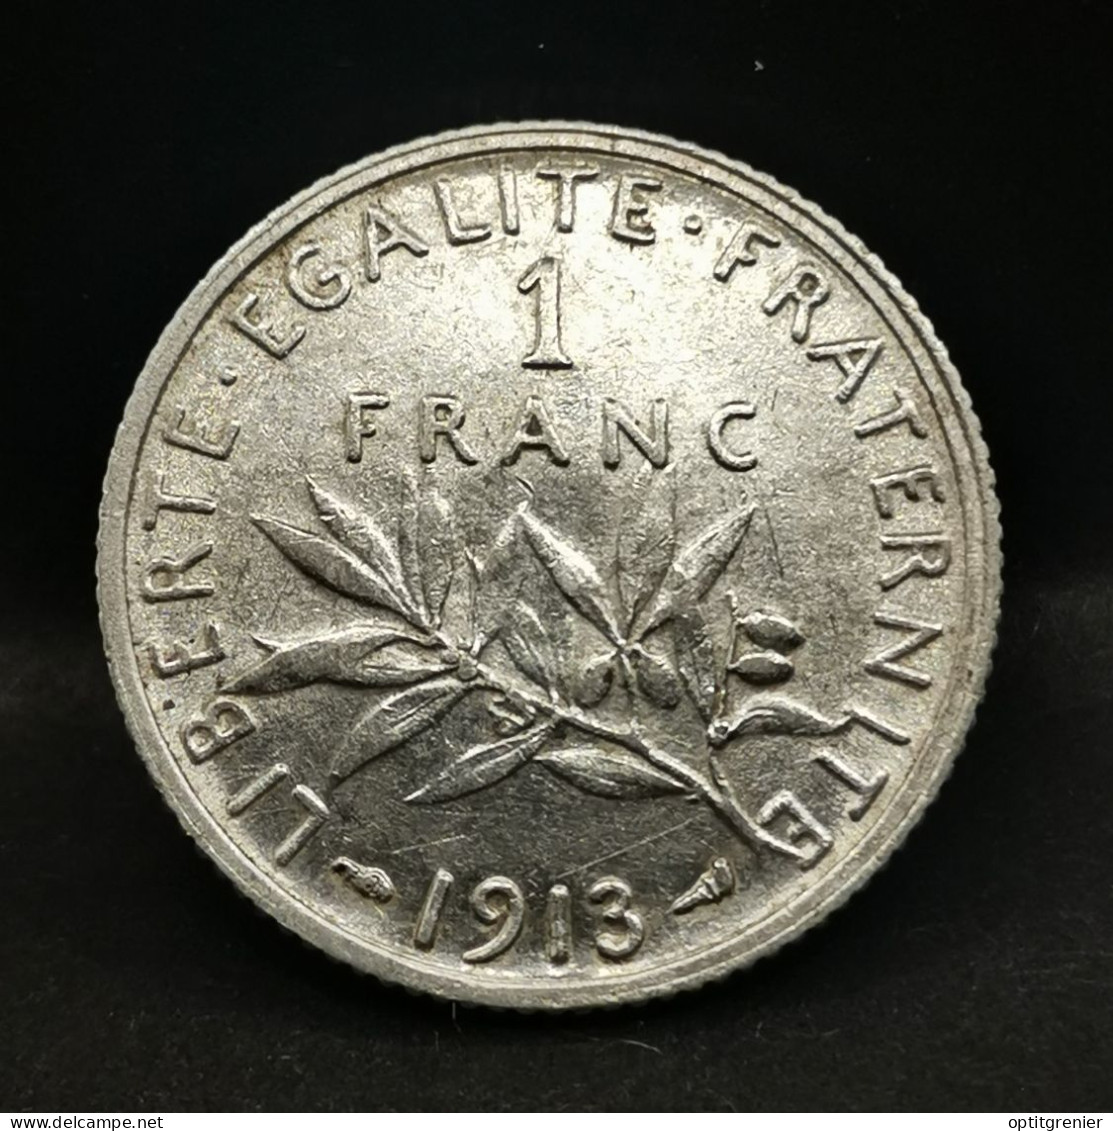 1 FRANC SEMEUSE ARGENT 1913 FRANCE / SILVER (Réf. 24425) - 1 Franc